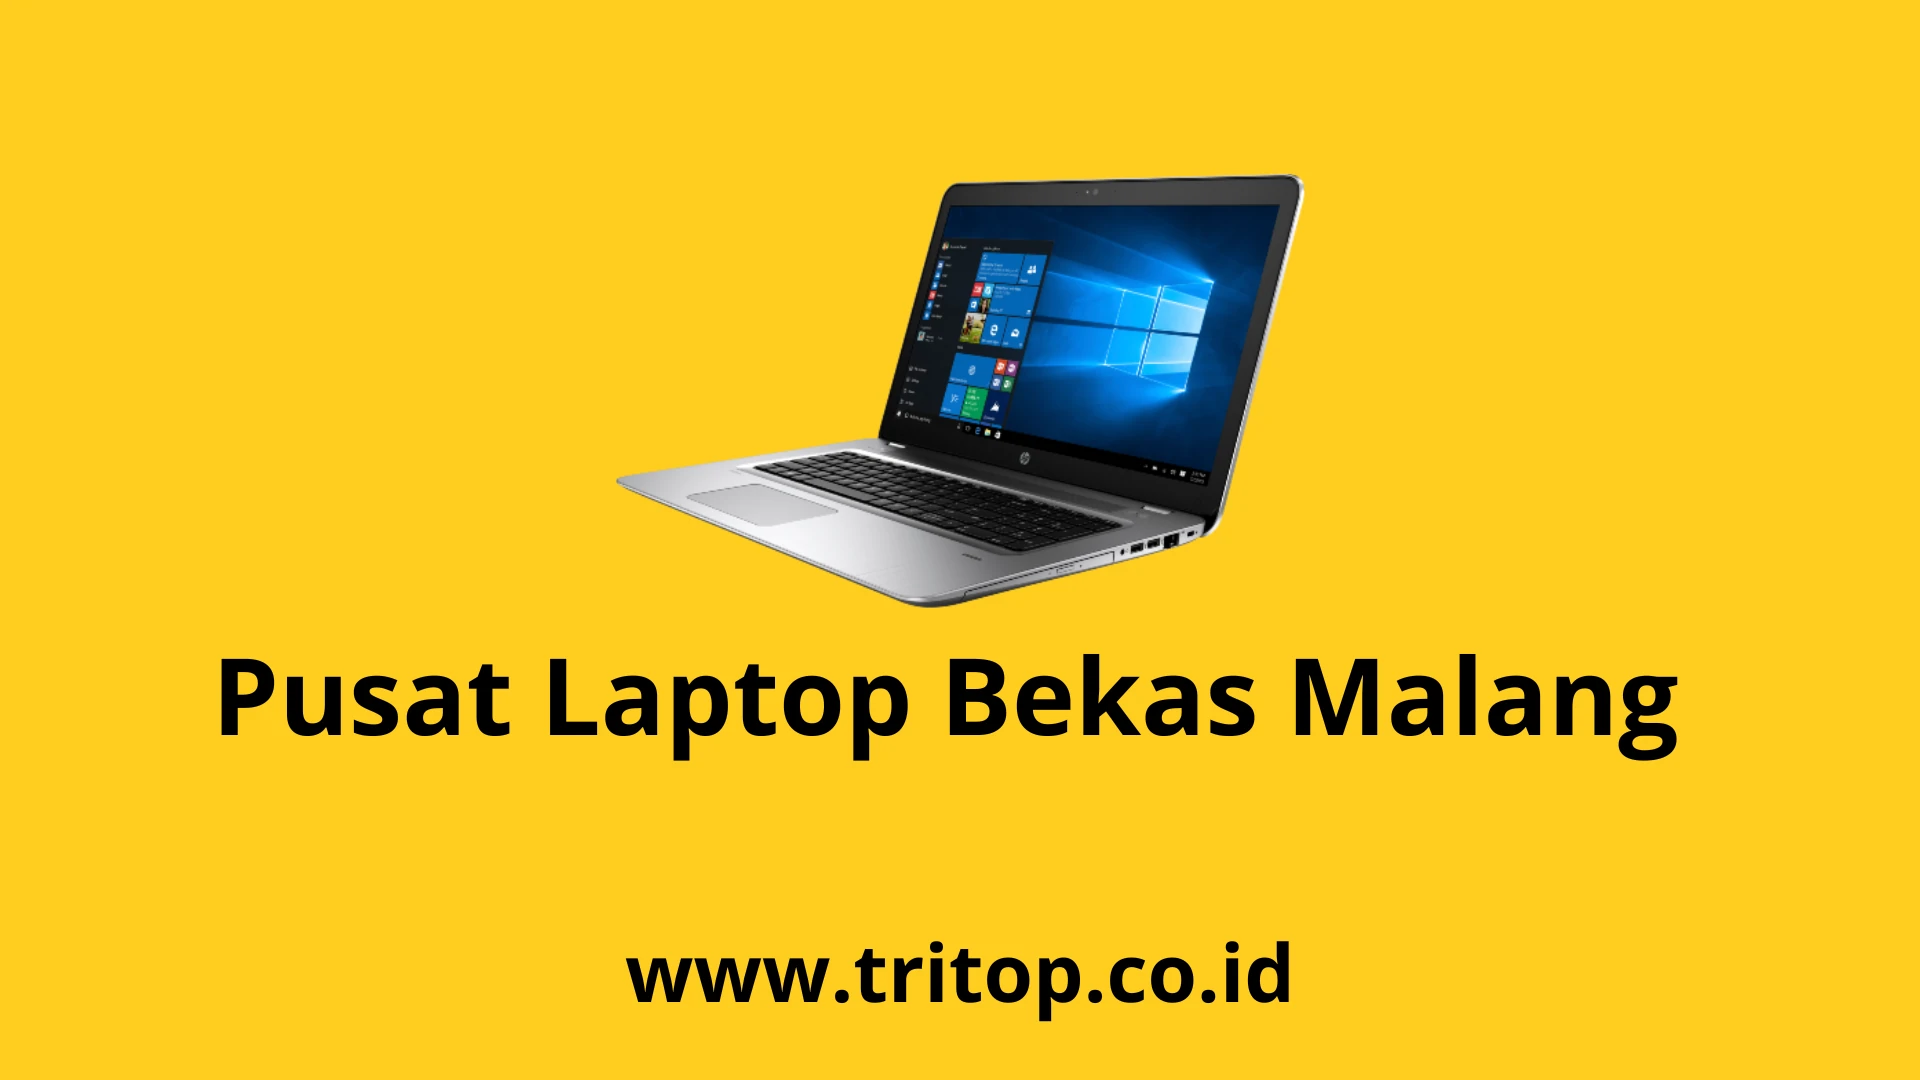 Pusat Laptop Bekas Malang www.tritop.co.id